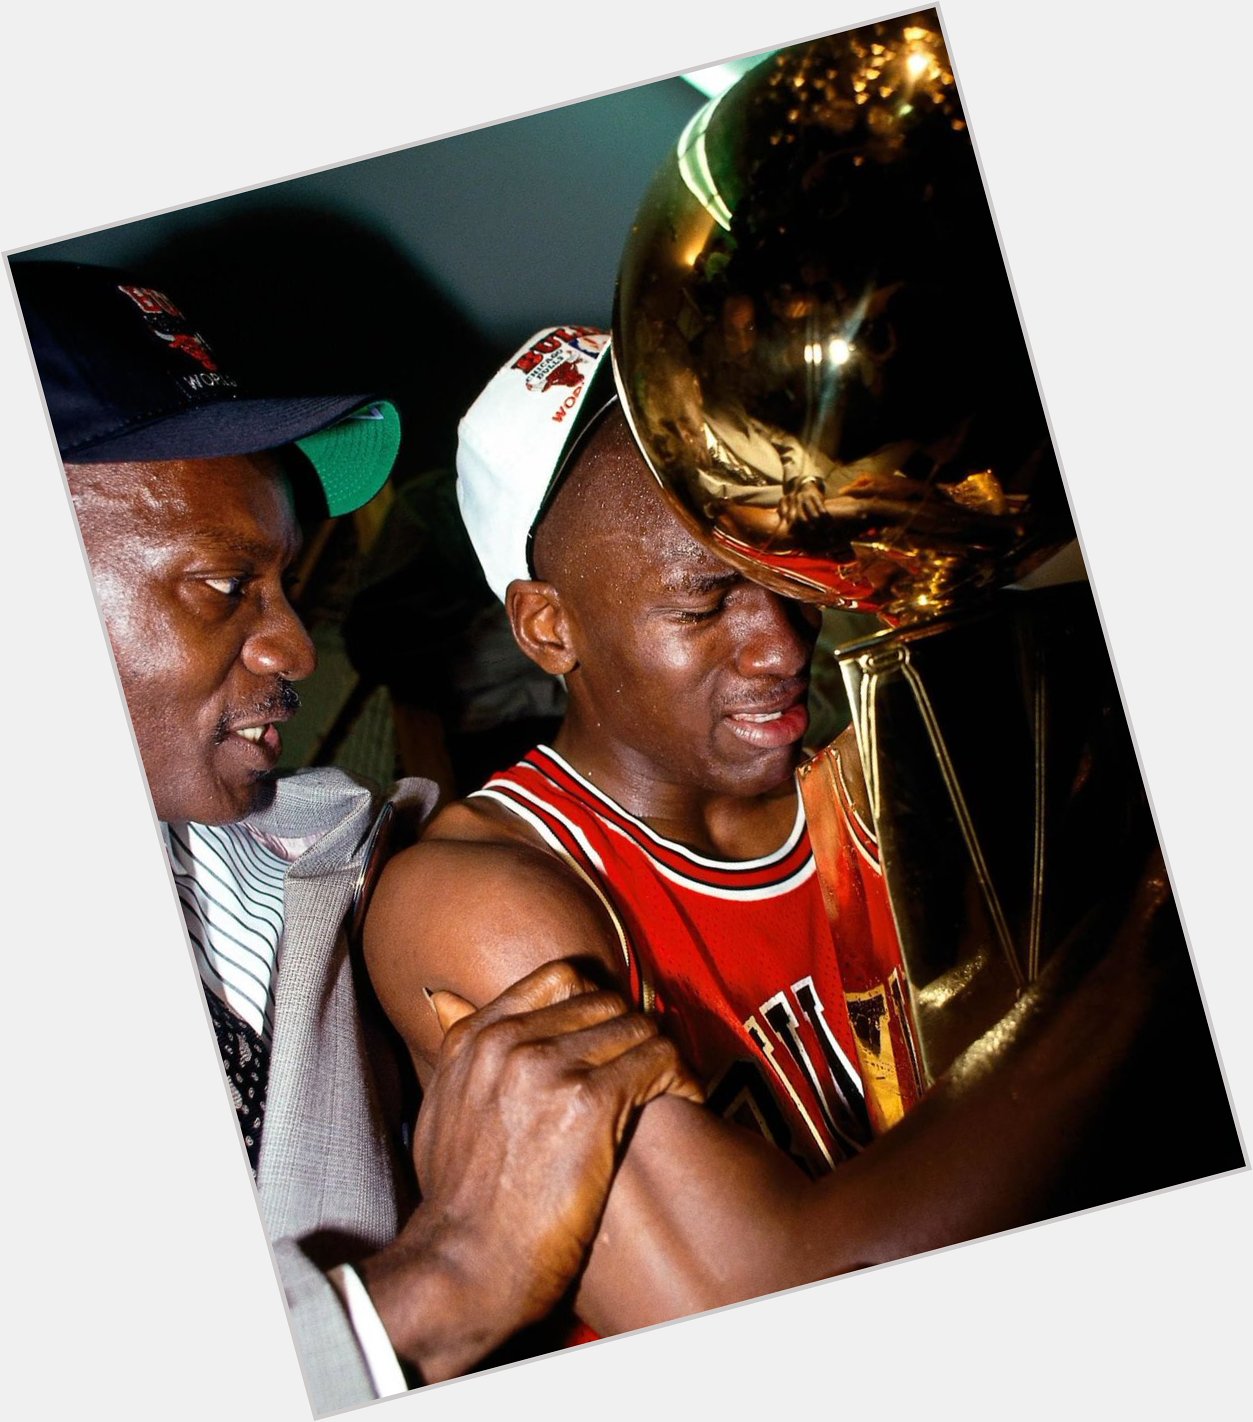 Happy Birthday to the legend that is Michael Jordan 